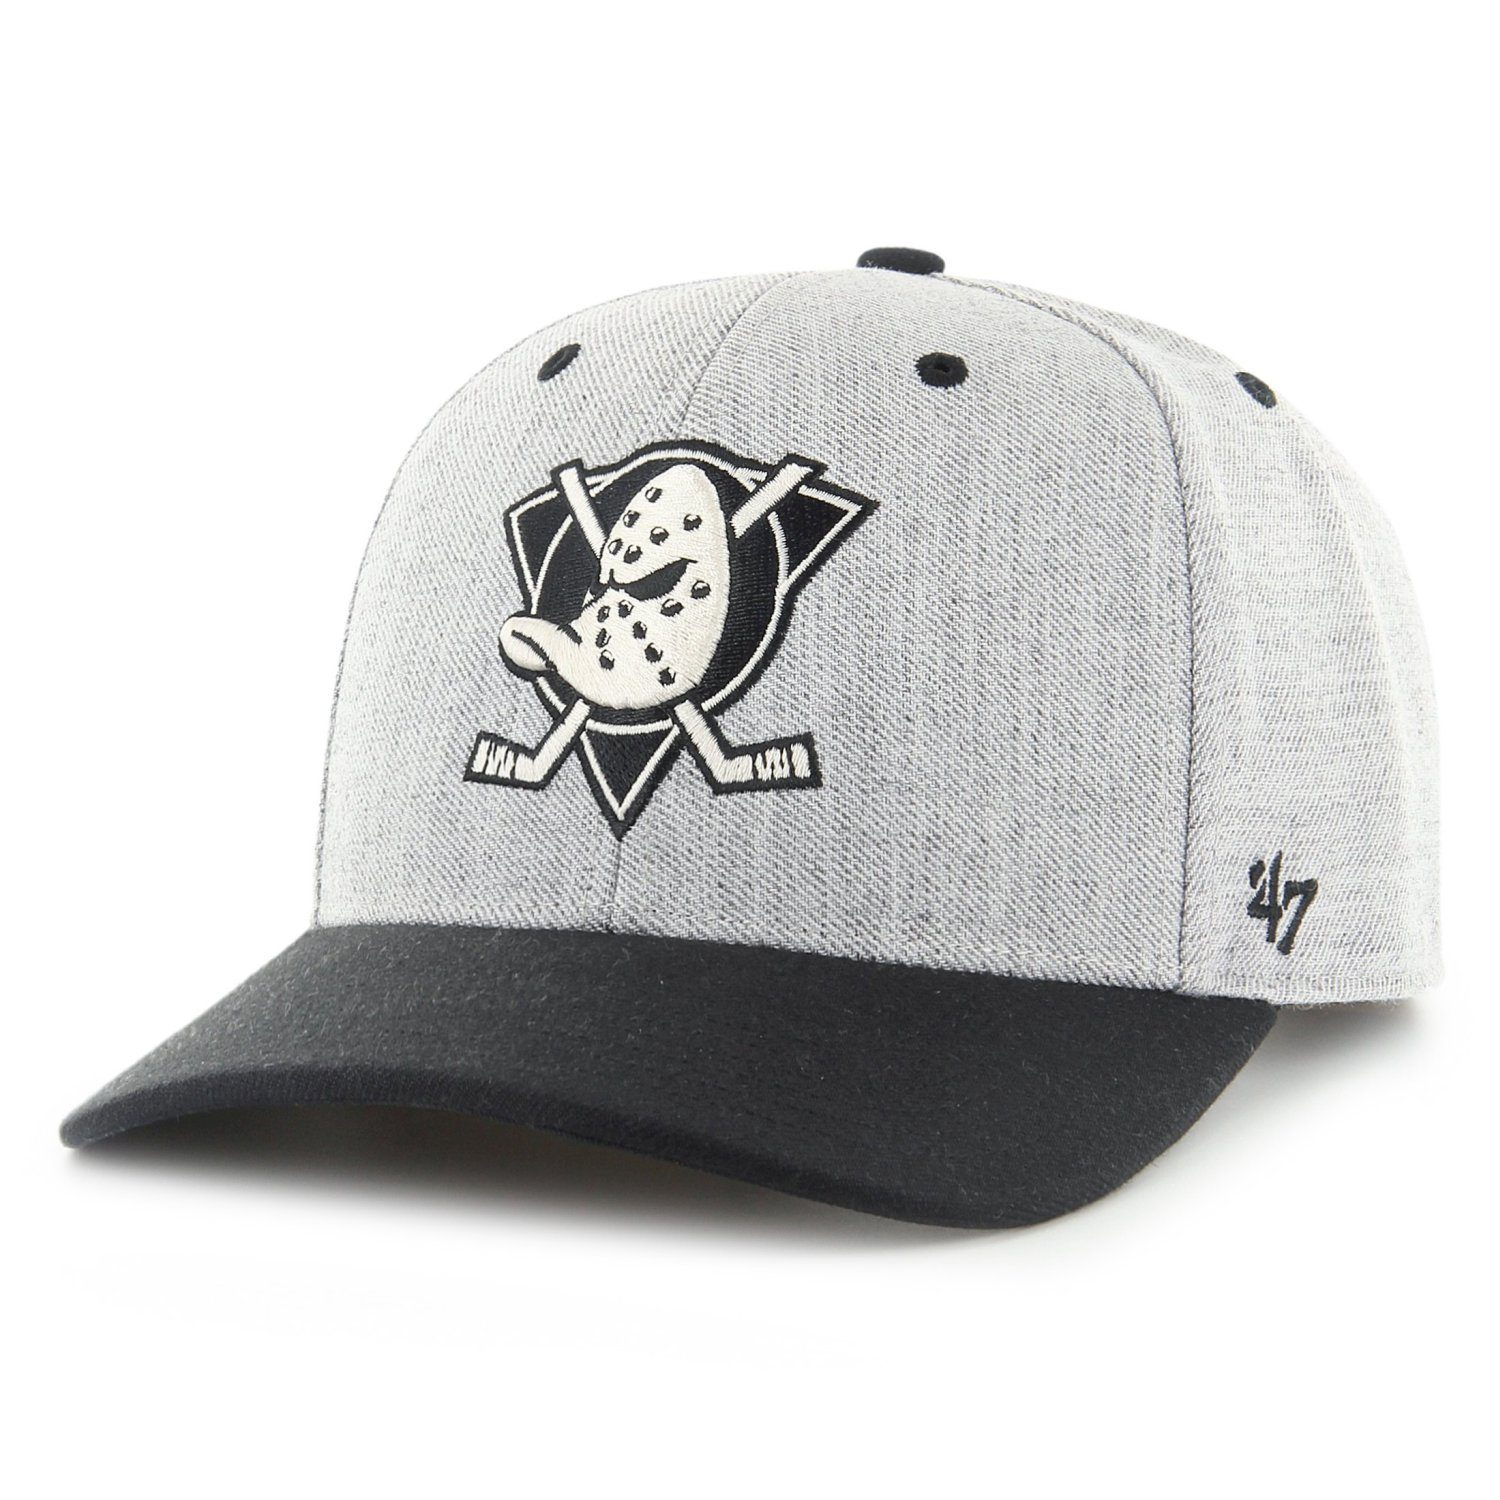 x27;47 Brand CLOUD STORM Anaheim Ducks Snapback Cap